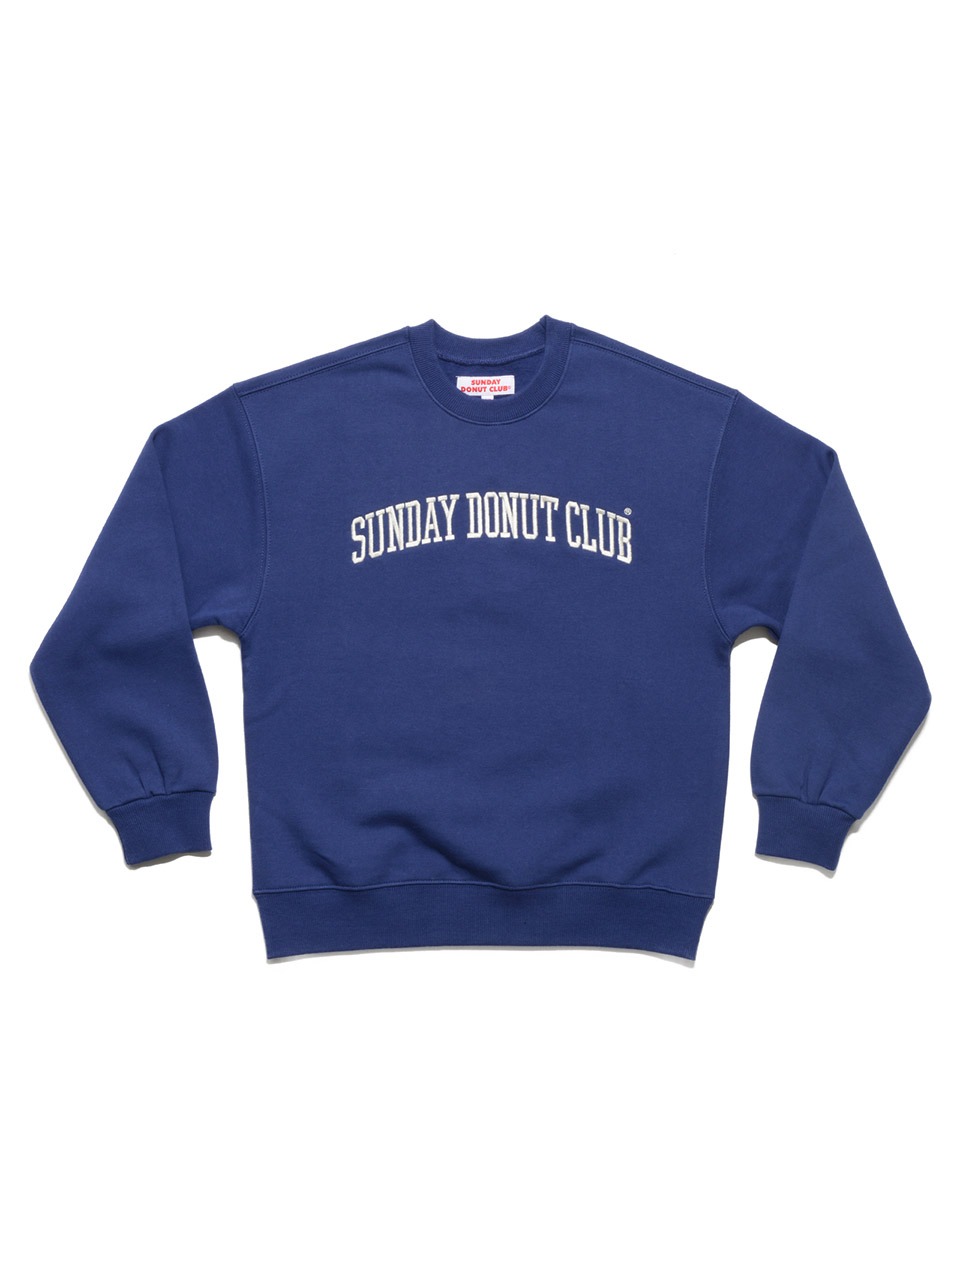 SUNDAY DONUT CLUB SWEATSHIRT [Blue]